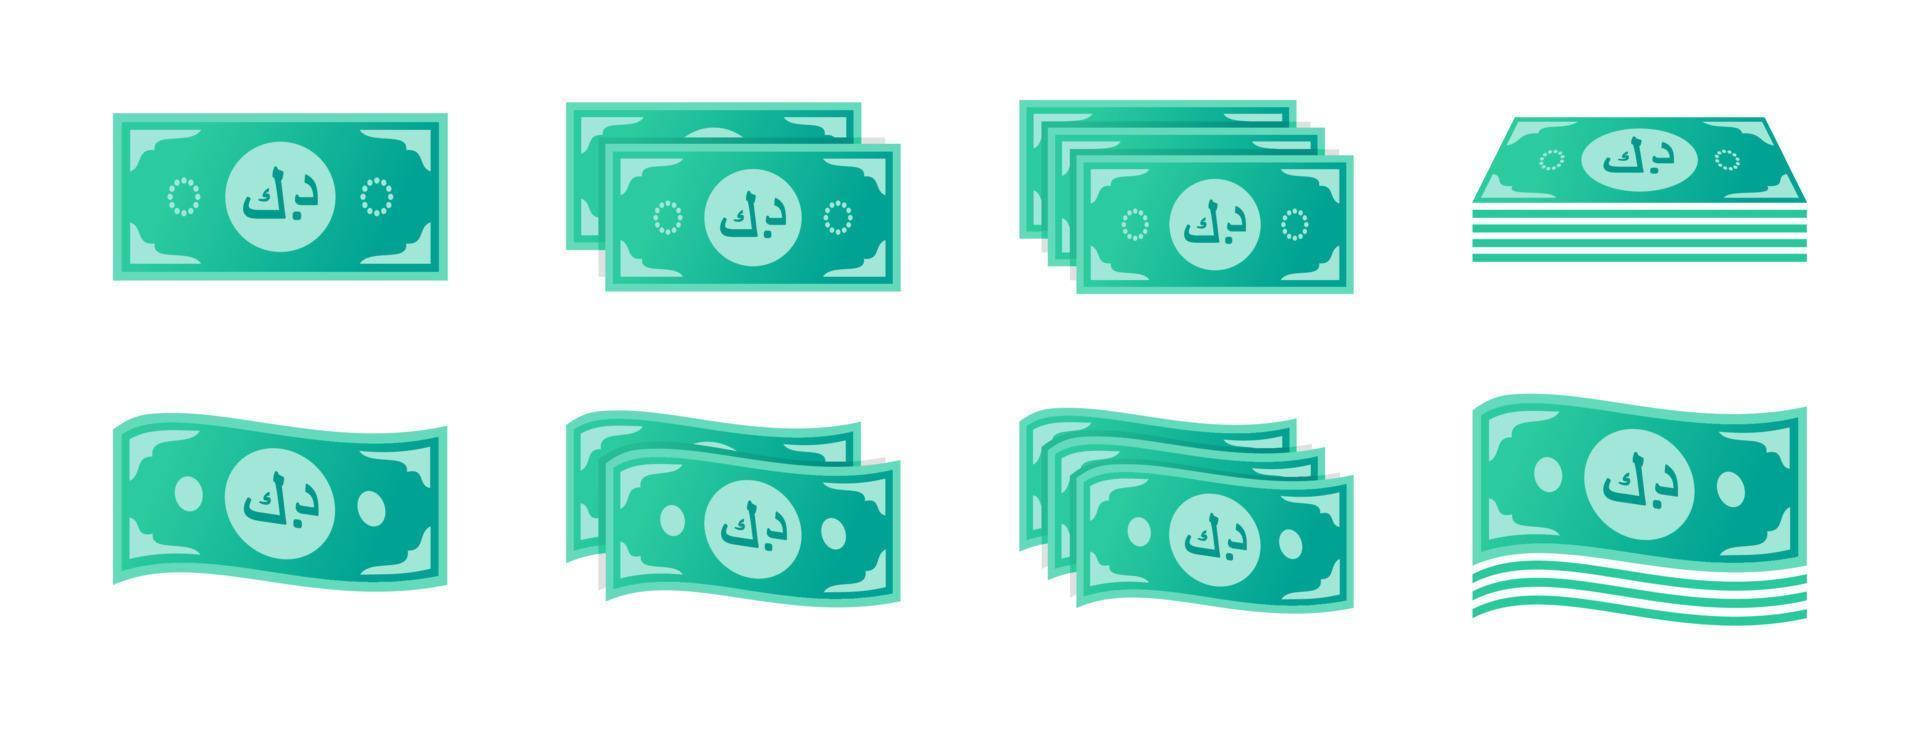 kuwaiti dinaro banconota icona impostato vettore